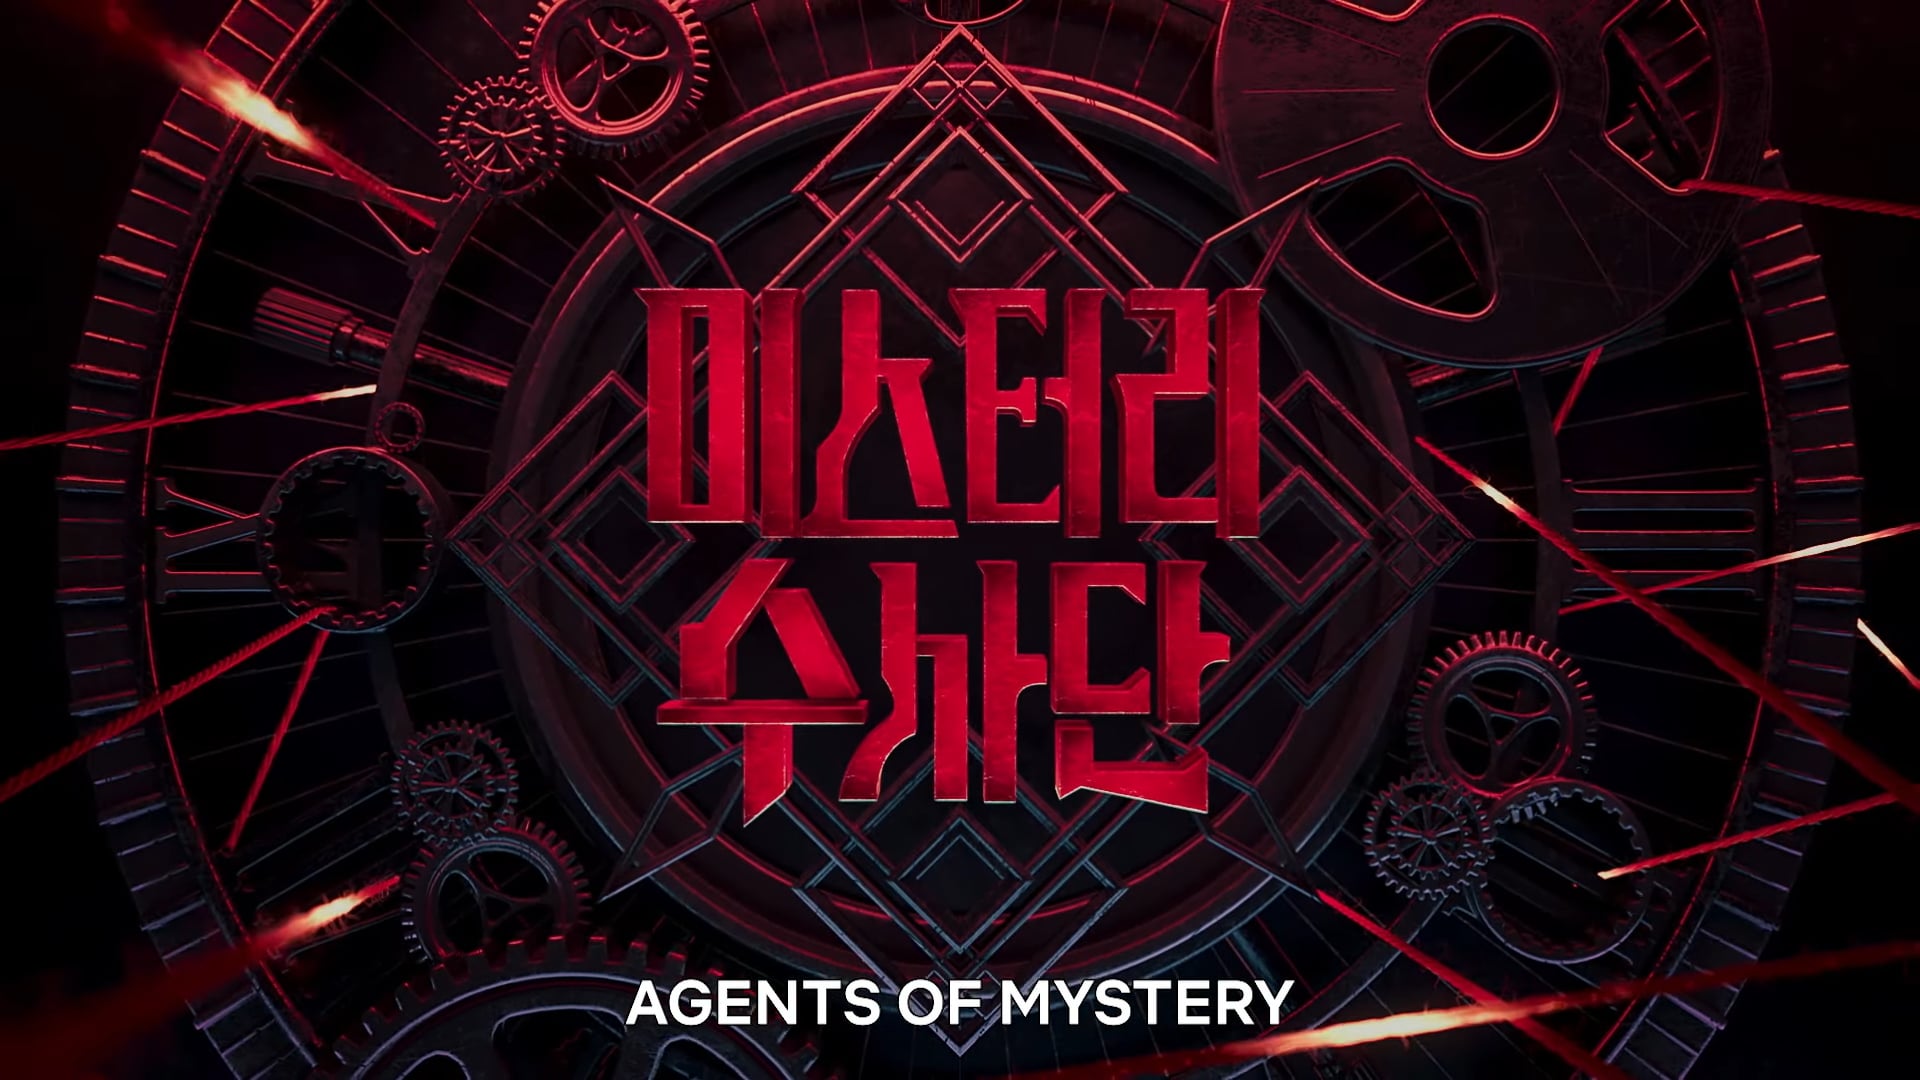 240521 Karina @ Netflix's "Agents of Mystery" (Teaser)